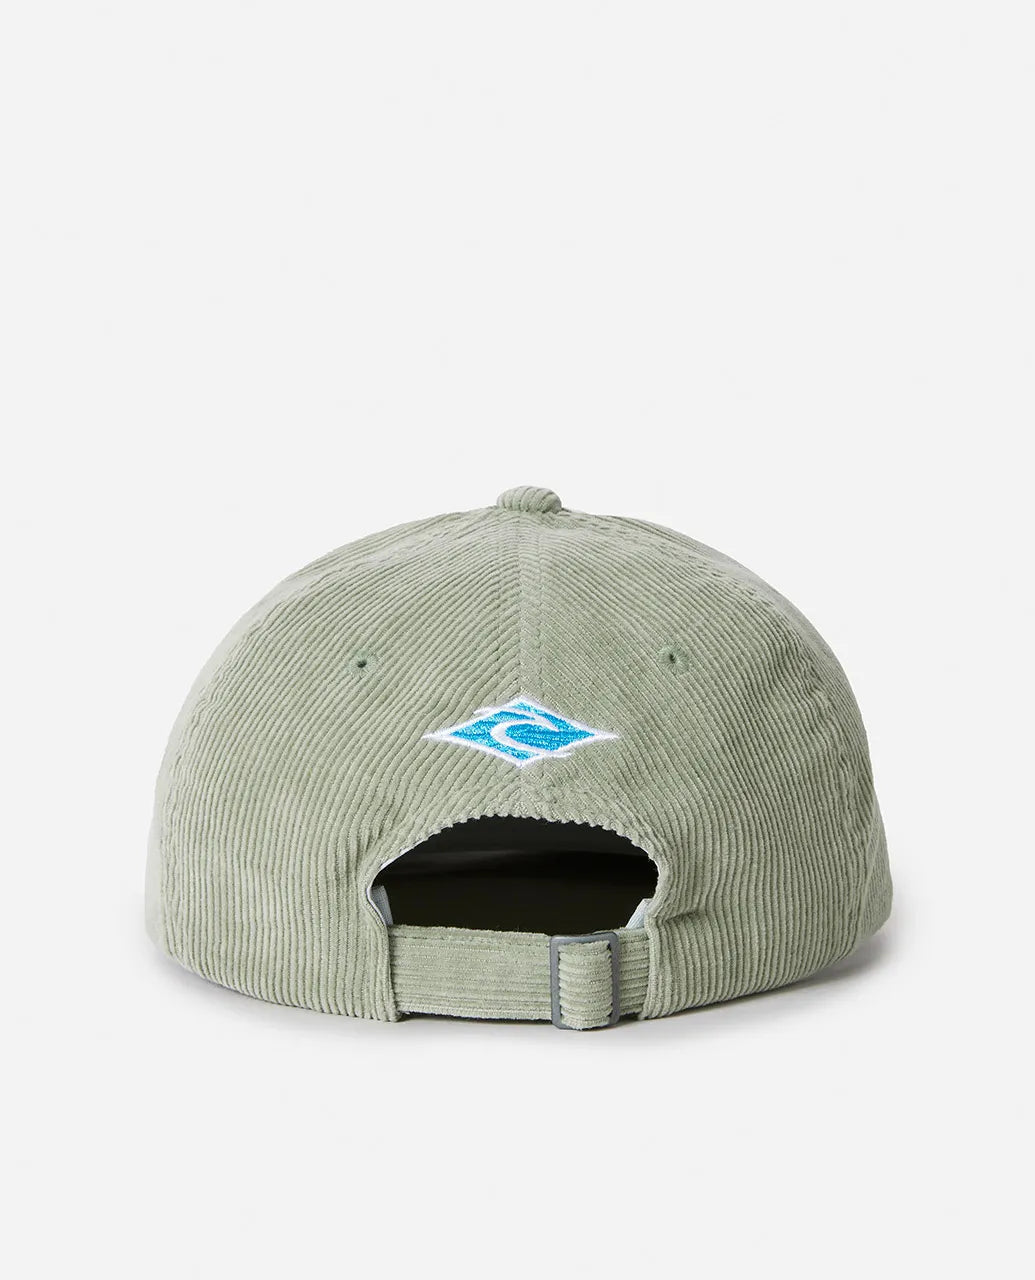 RipCurl Diamond Adjustable Cap Hats RIPCURL MENS 